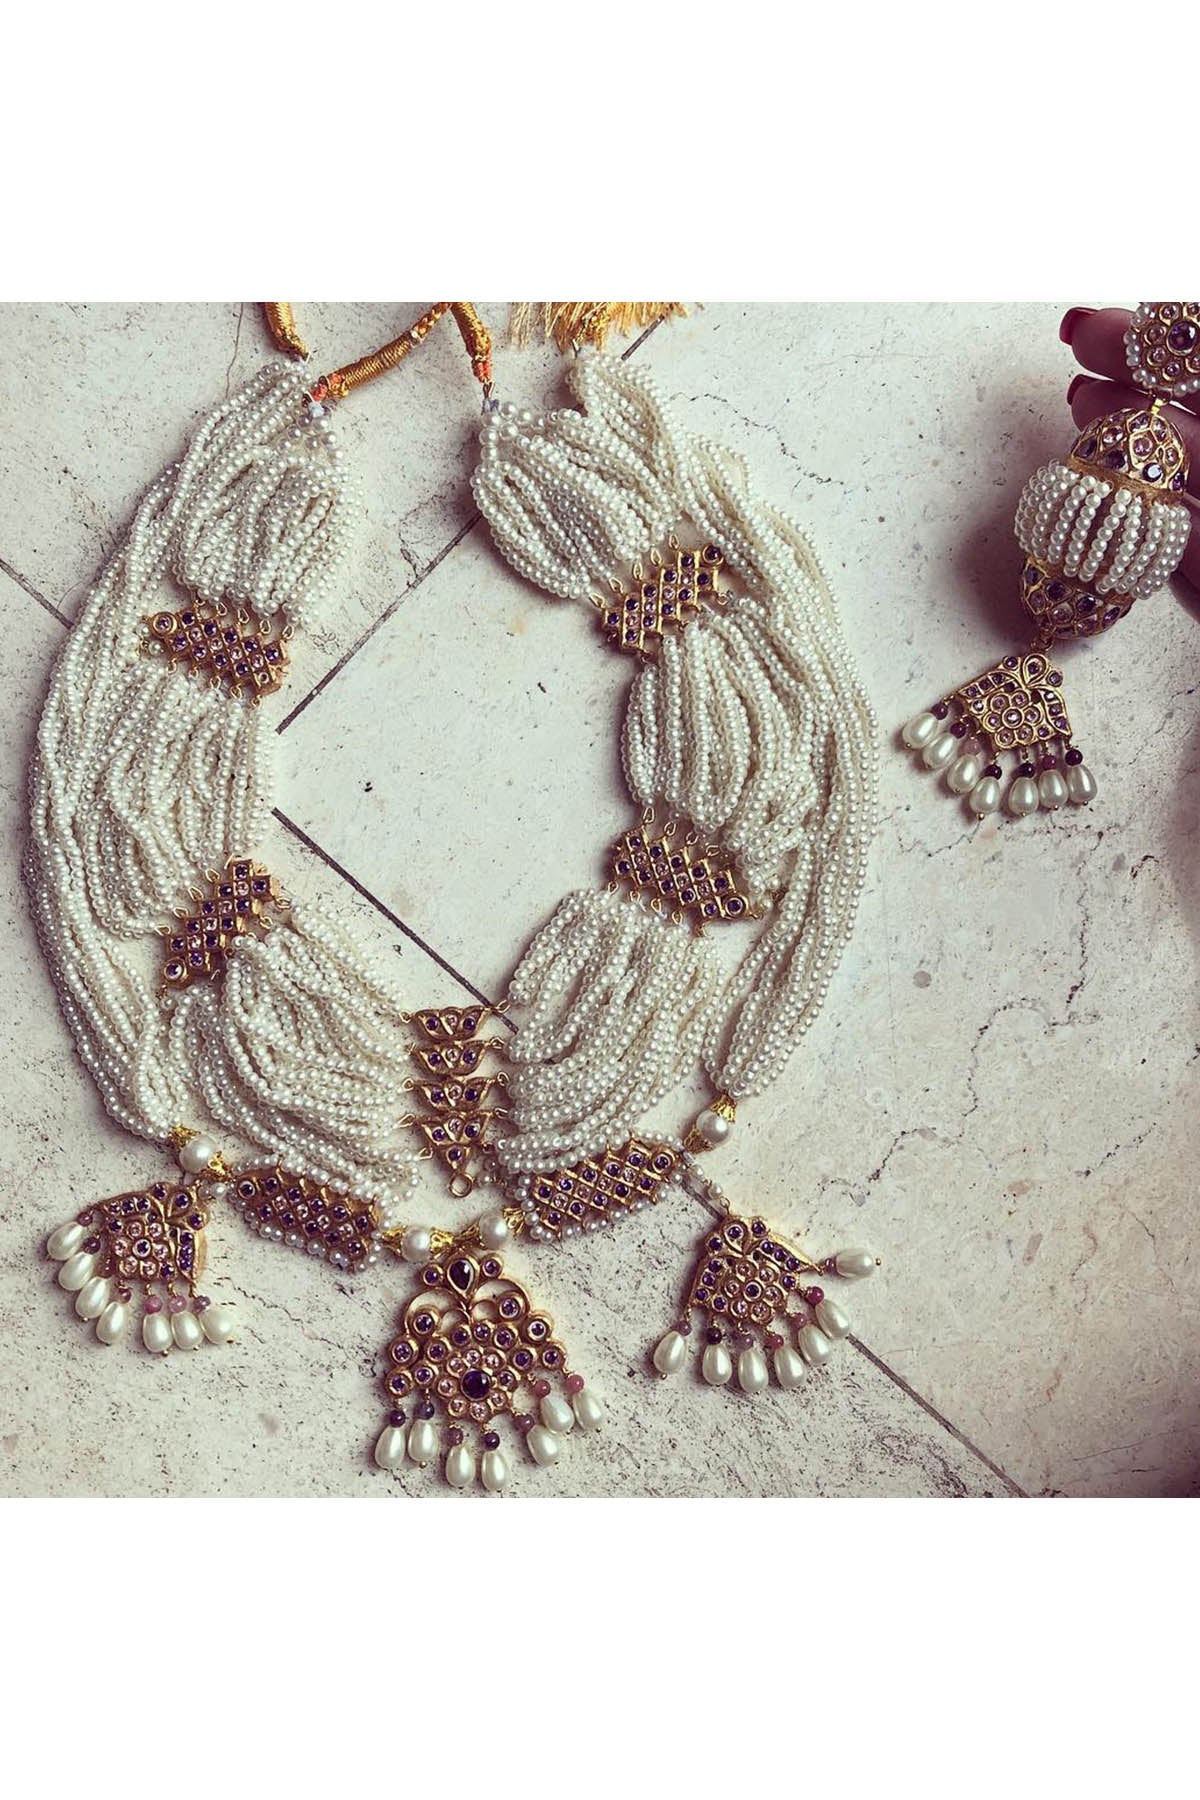 Pearl necklace with jhumki earrings. - Meraki